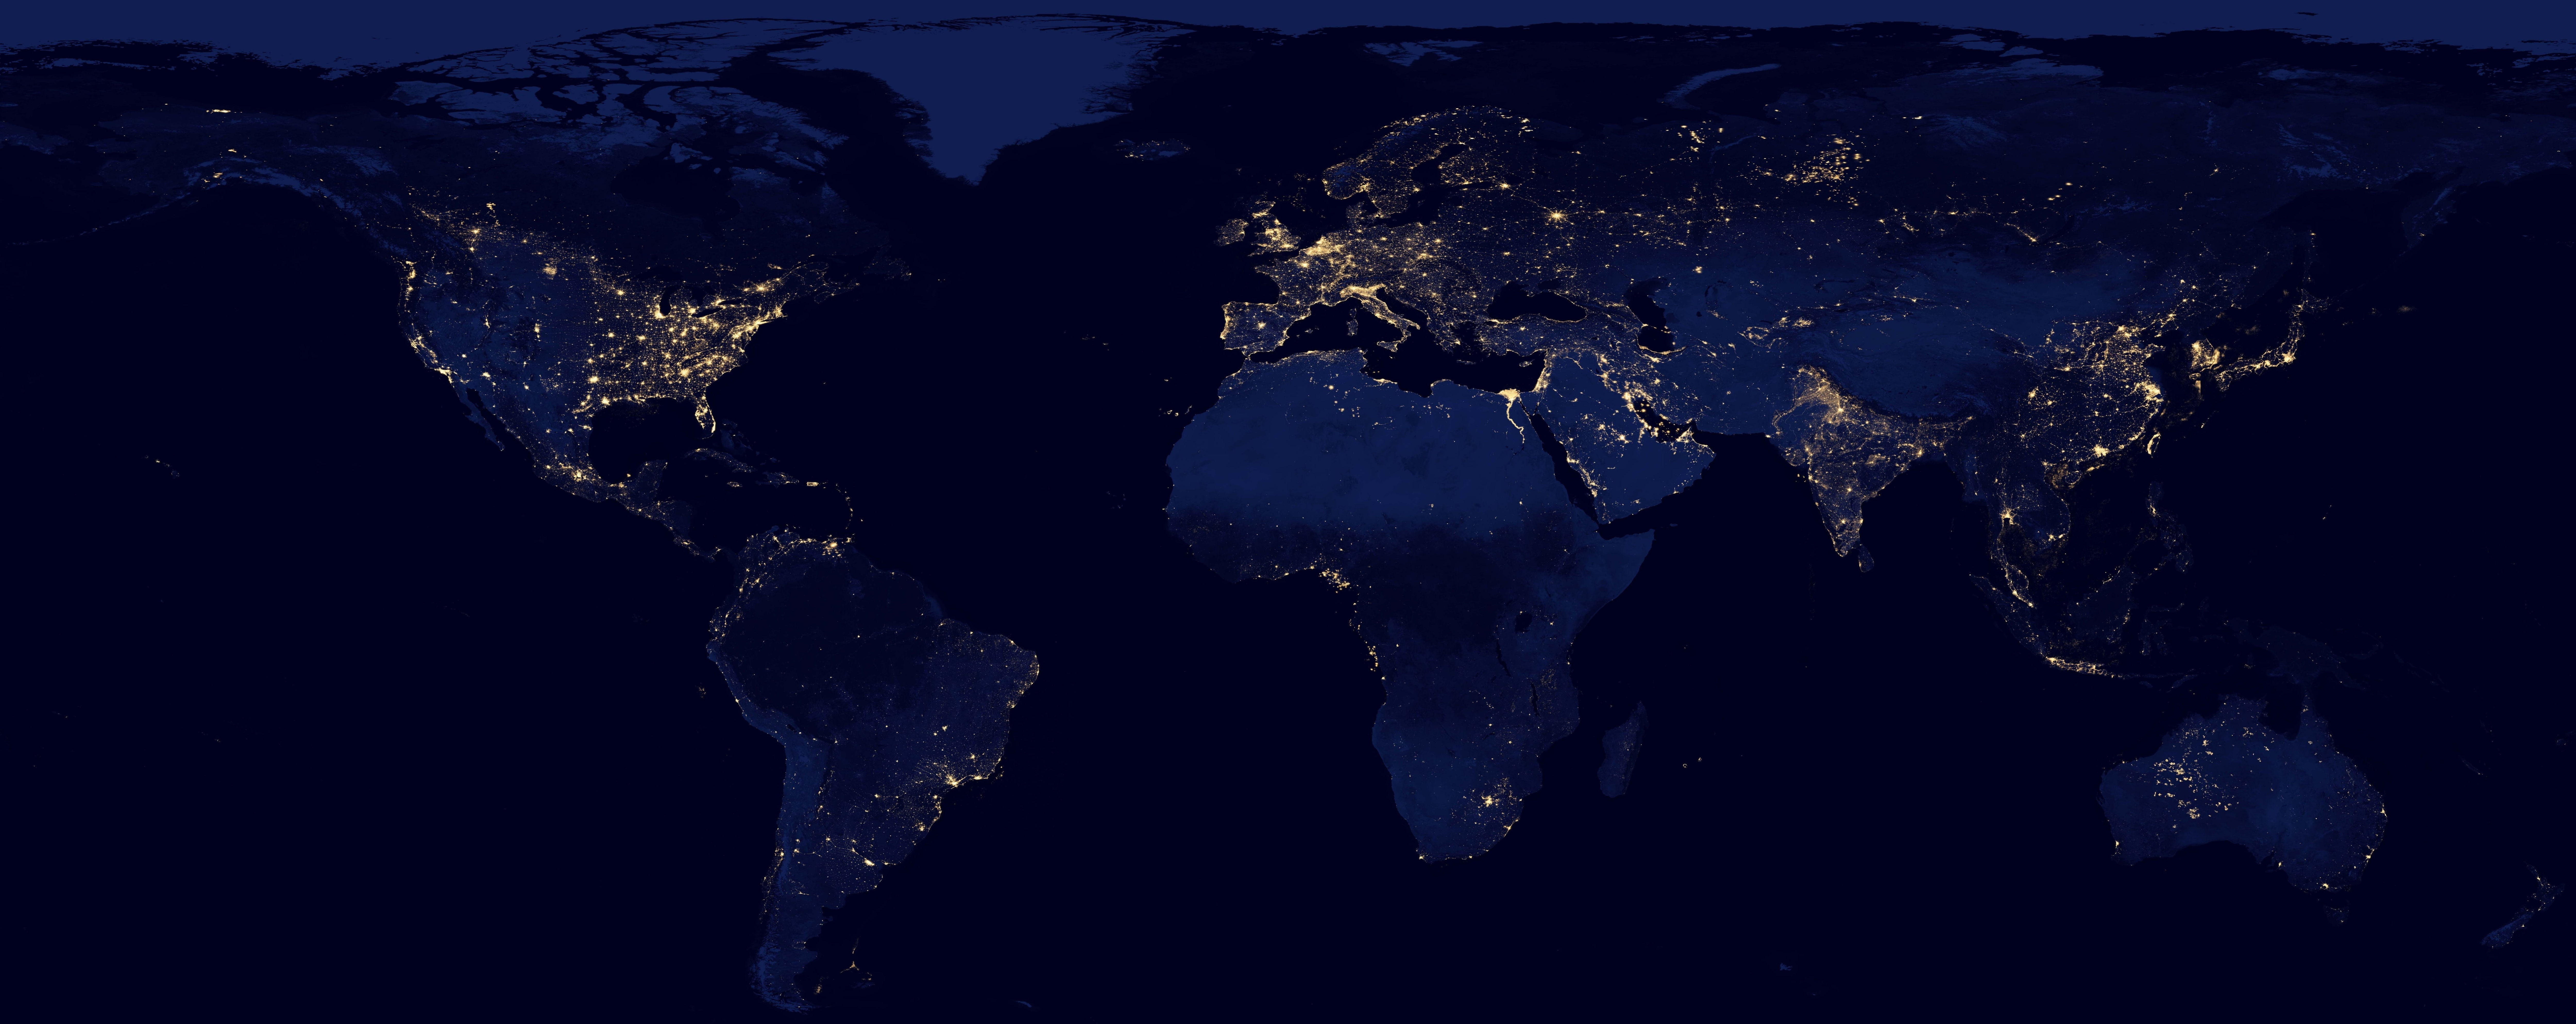 Space, world map during nighttime, illuminated, nature, satellite view